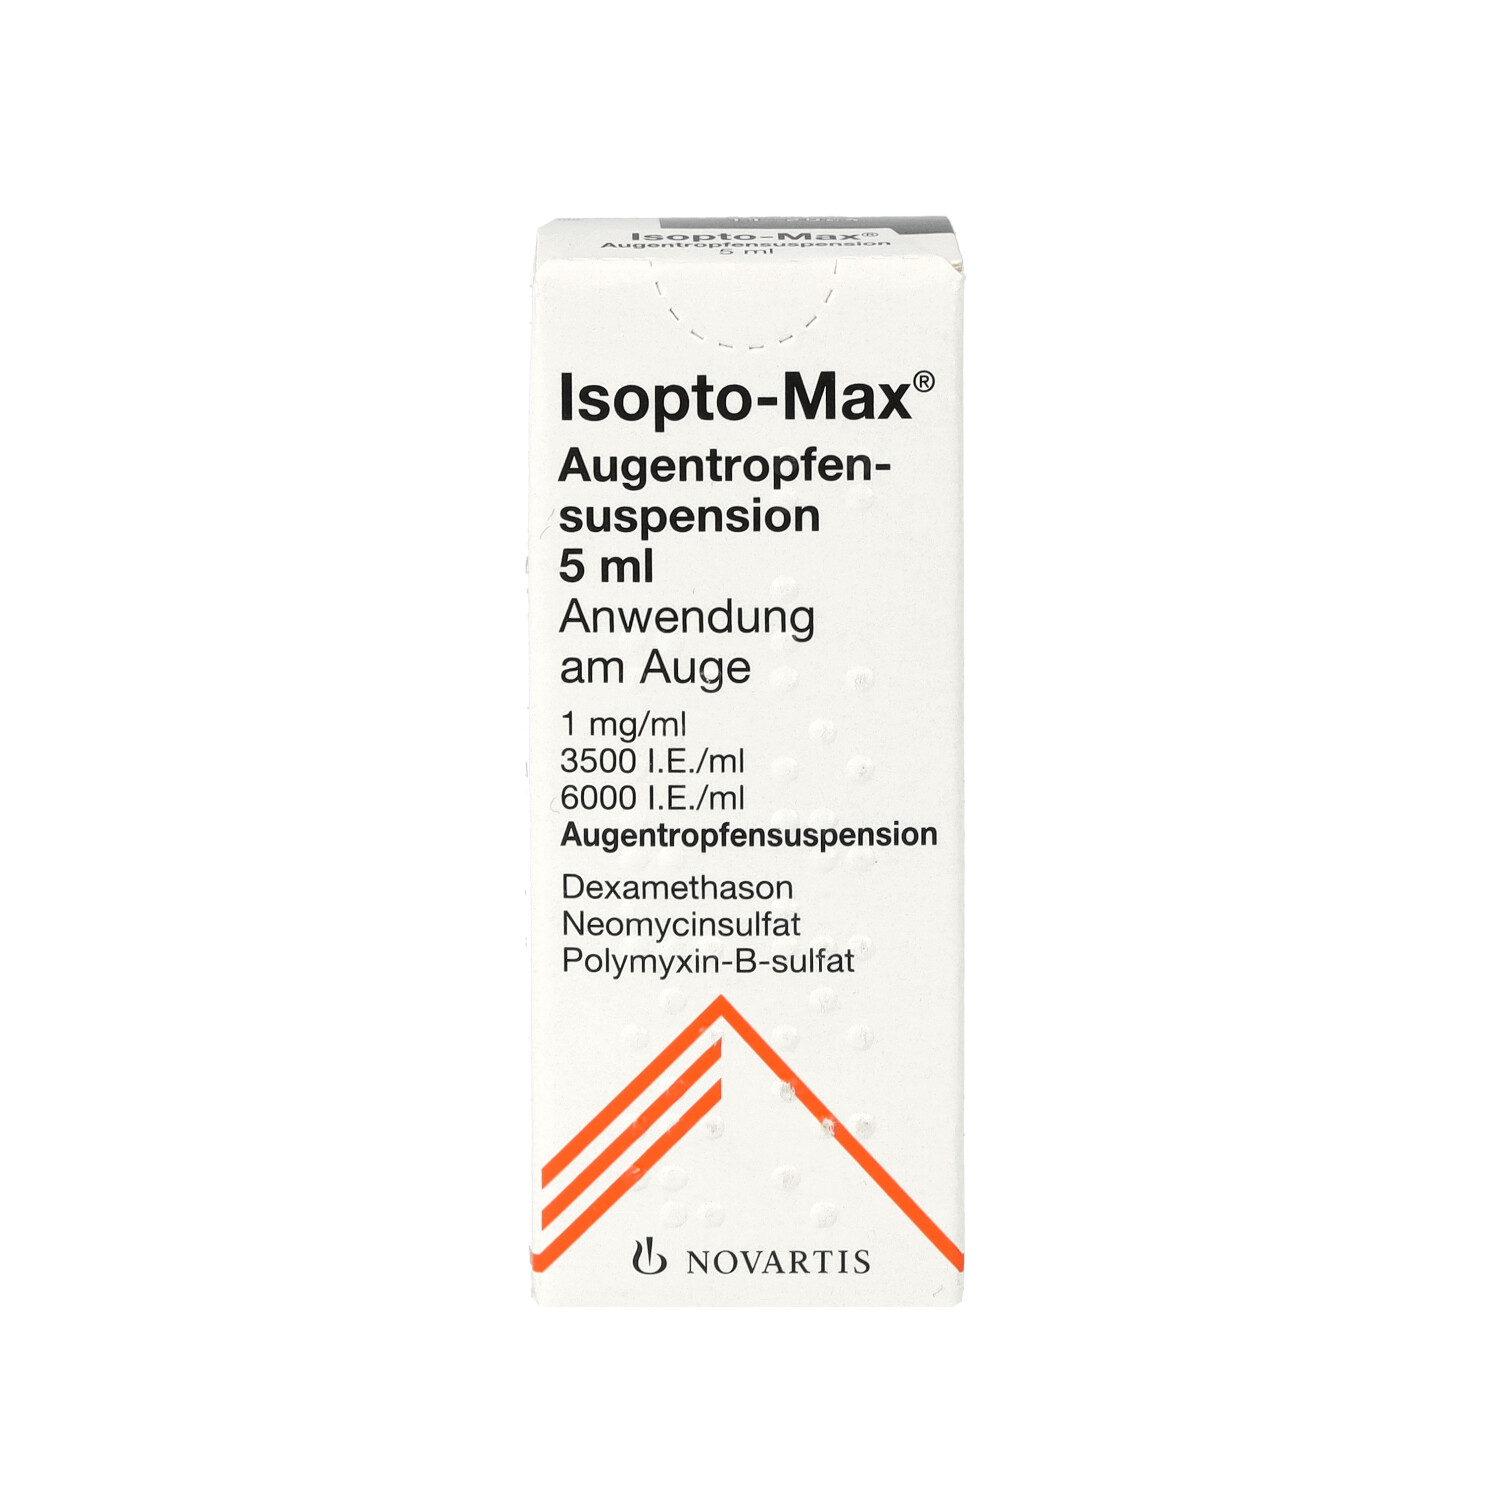 ISOPTO-MAX Augentropfensuspension